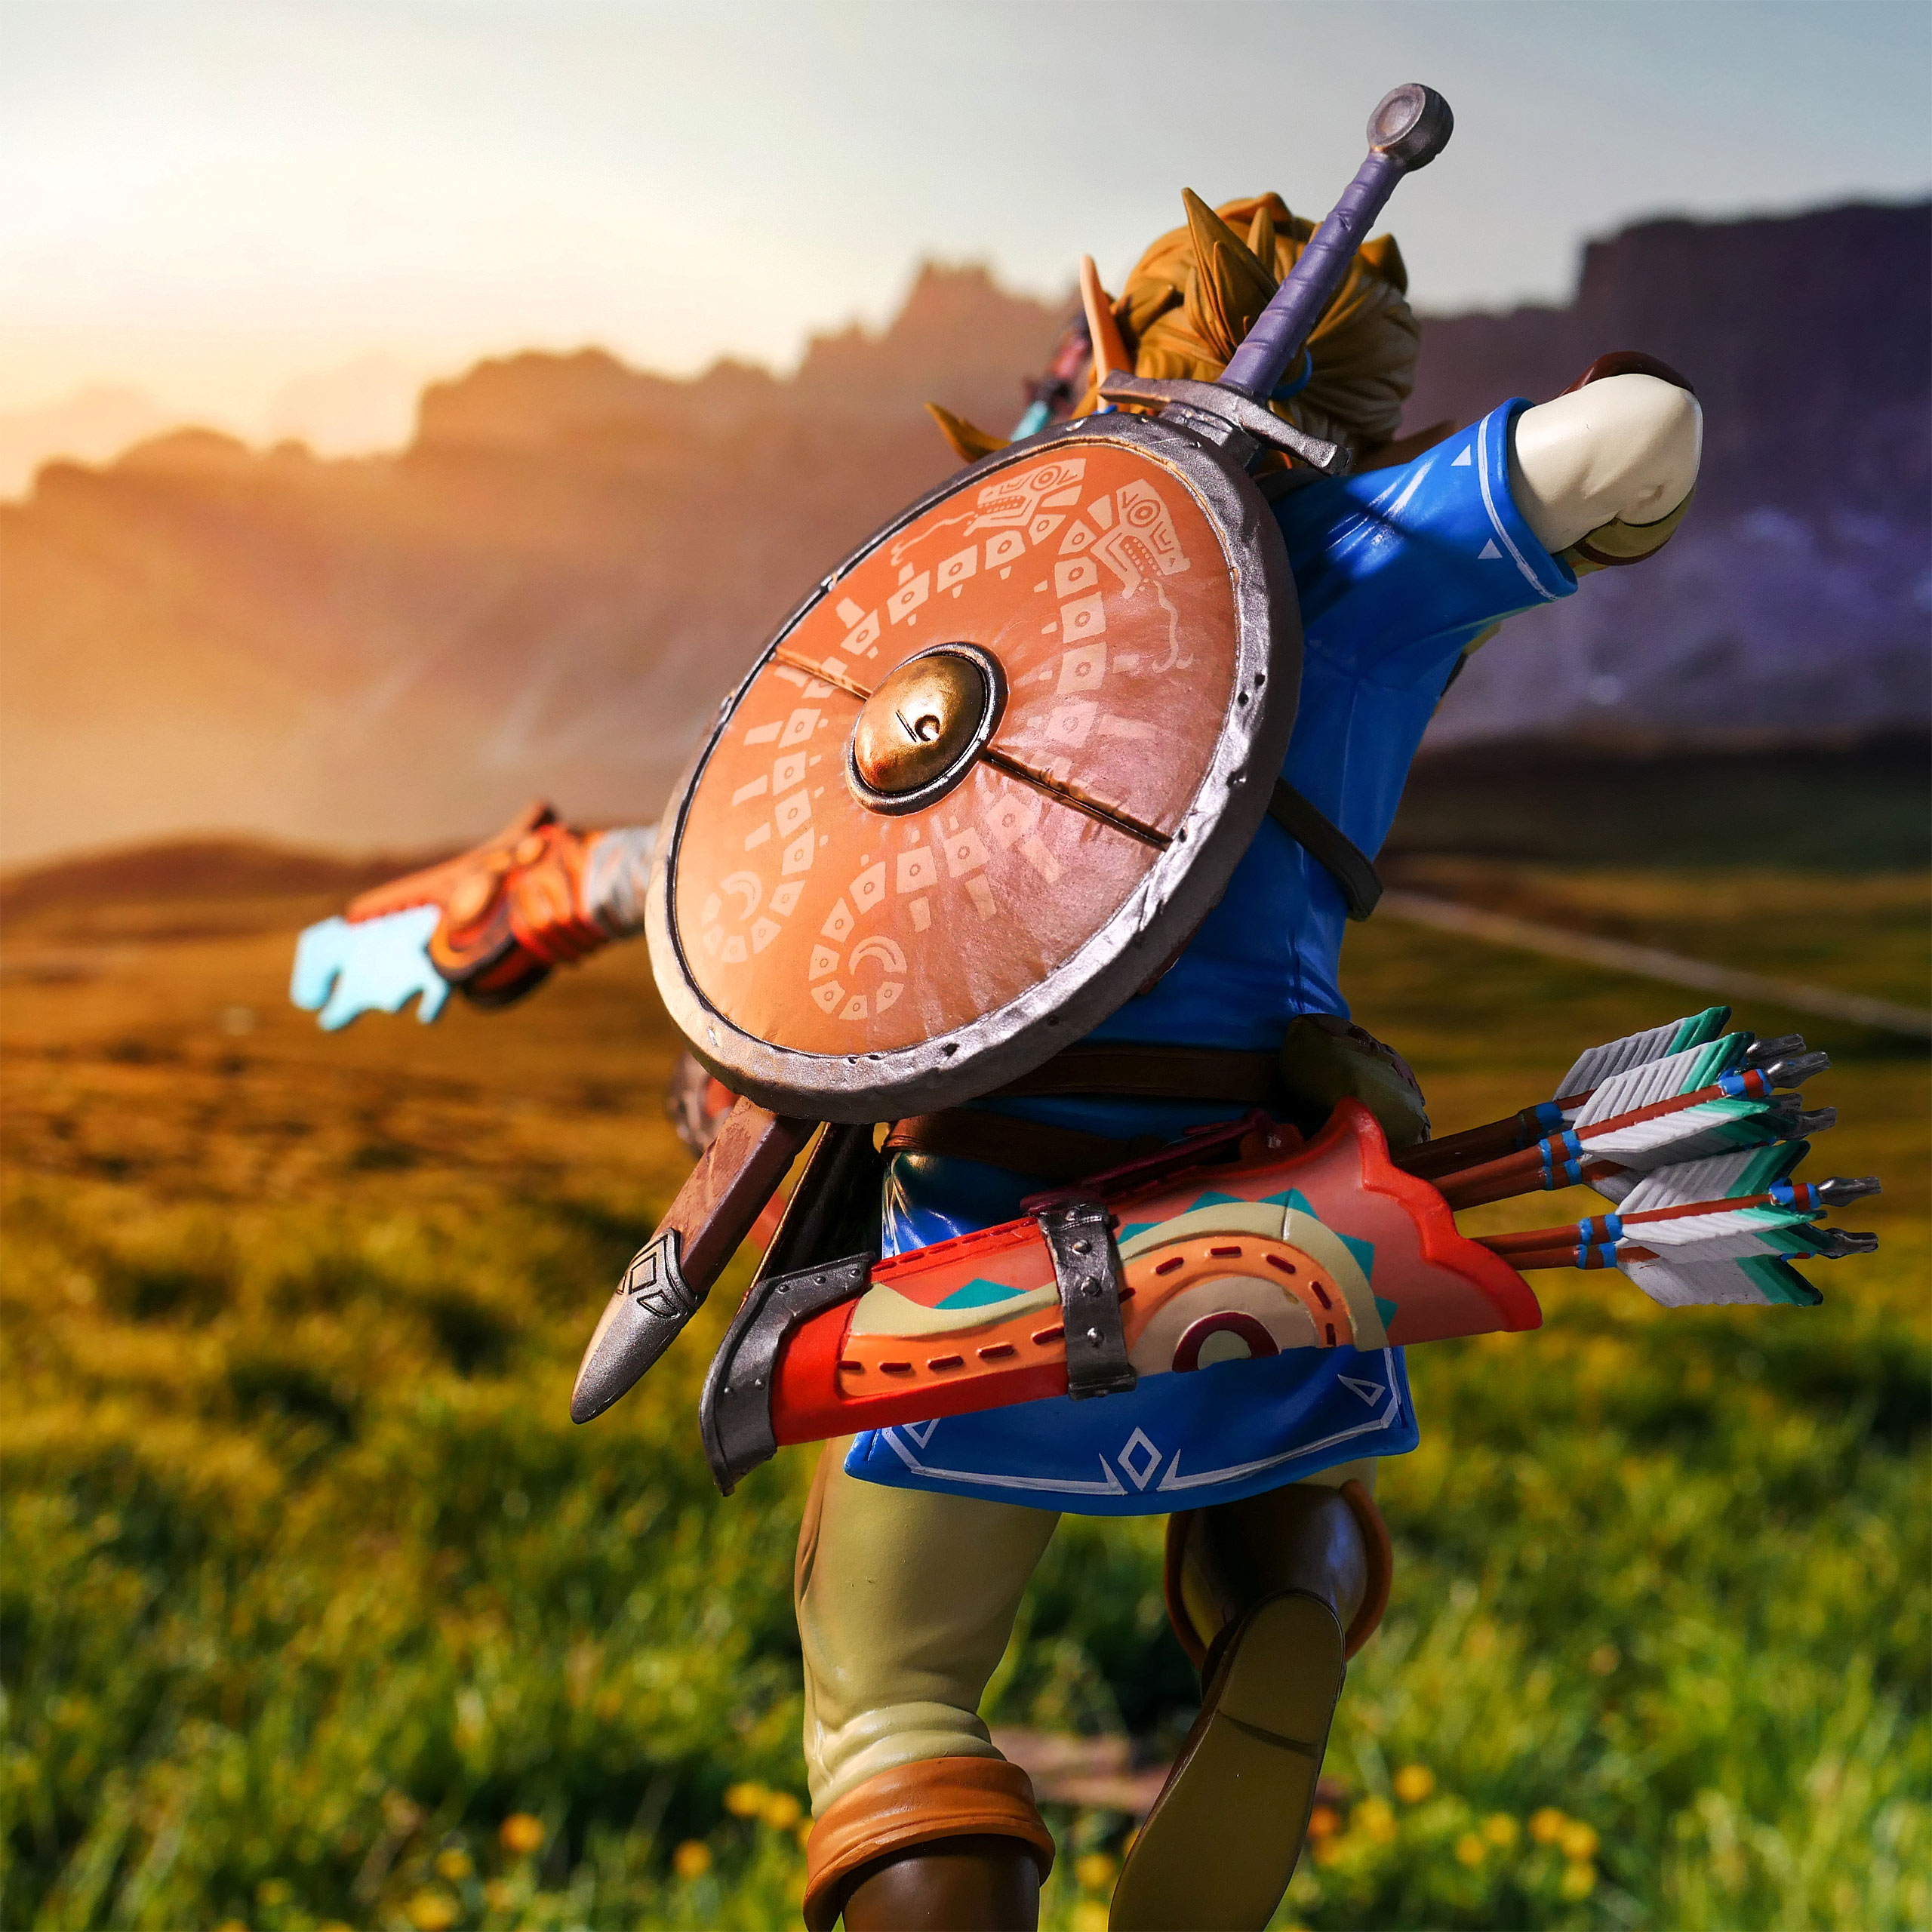 Zelda - Link Breath of the Wild figure with diorama